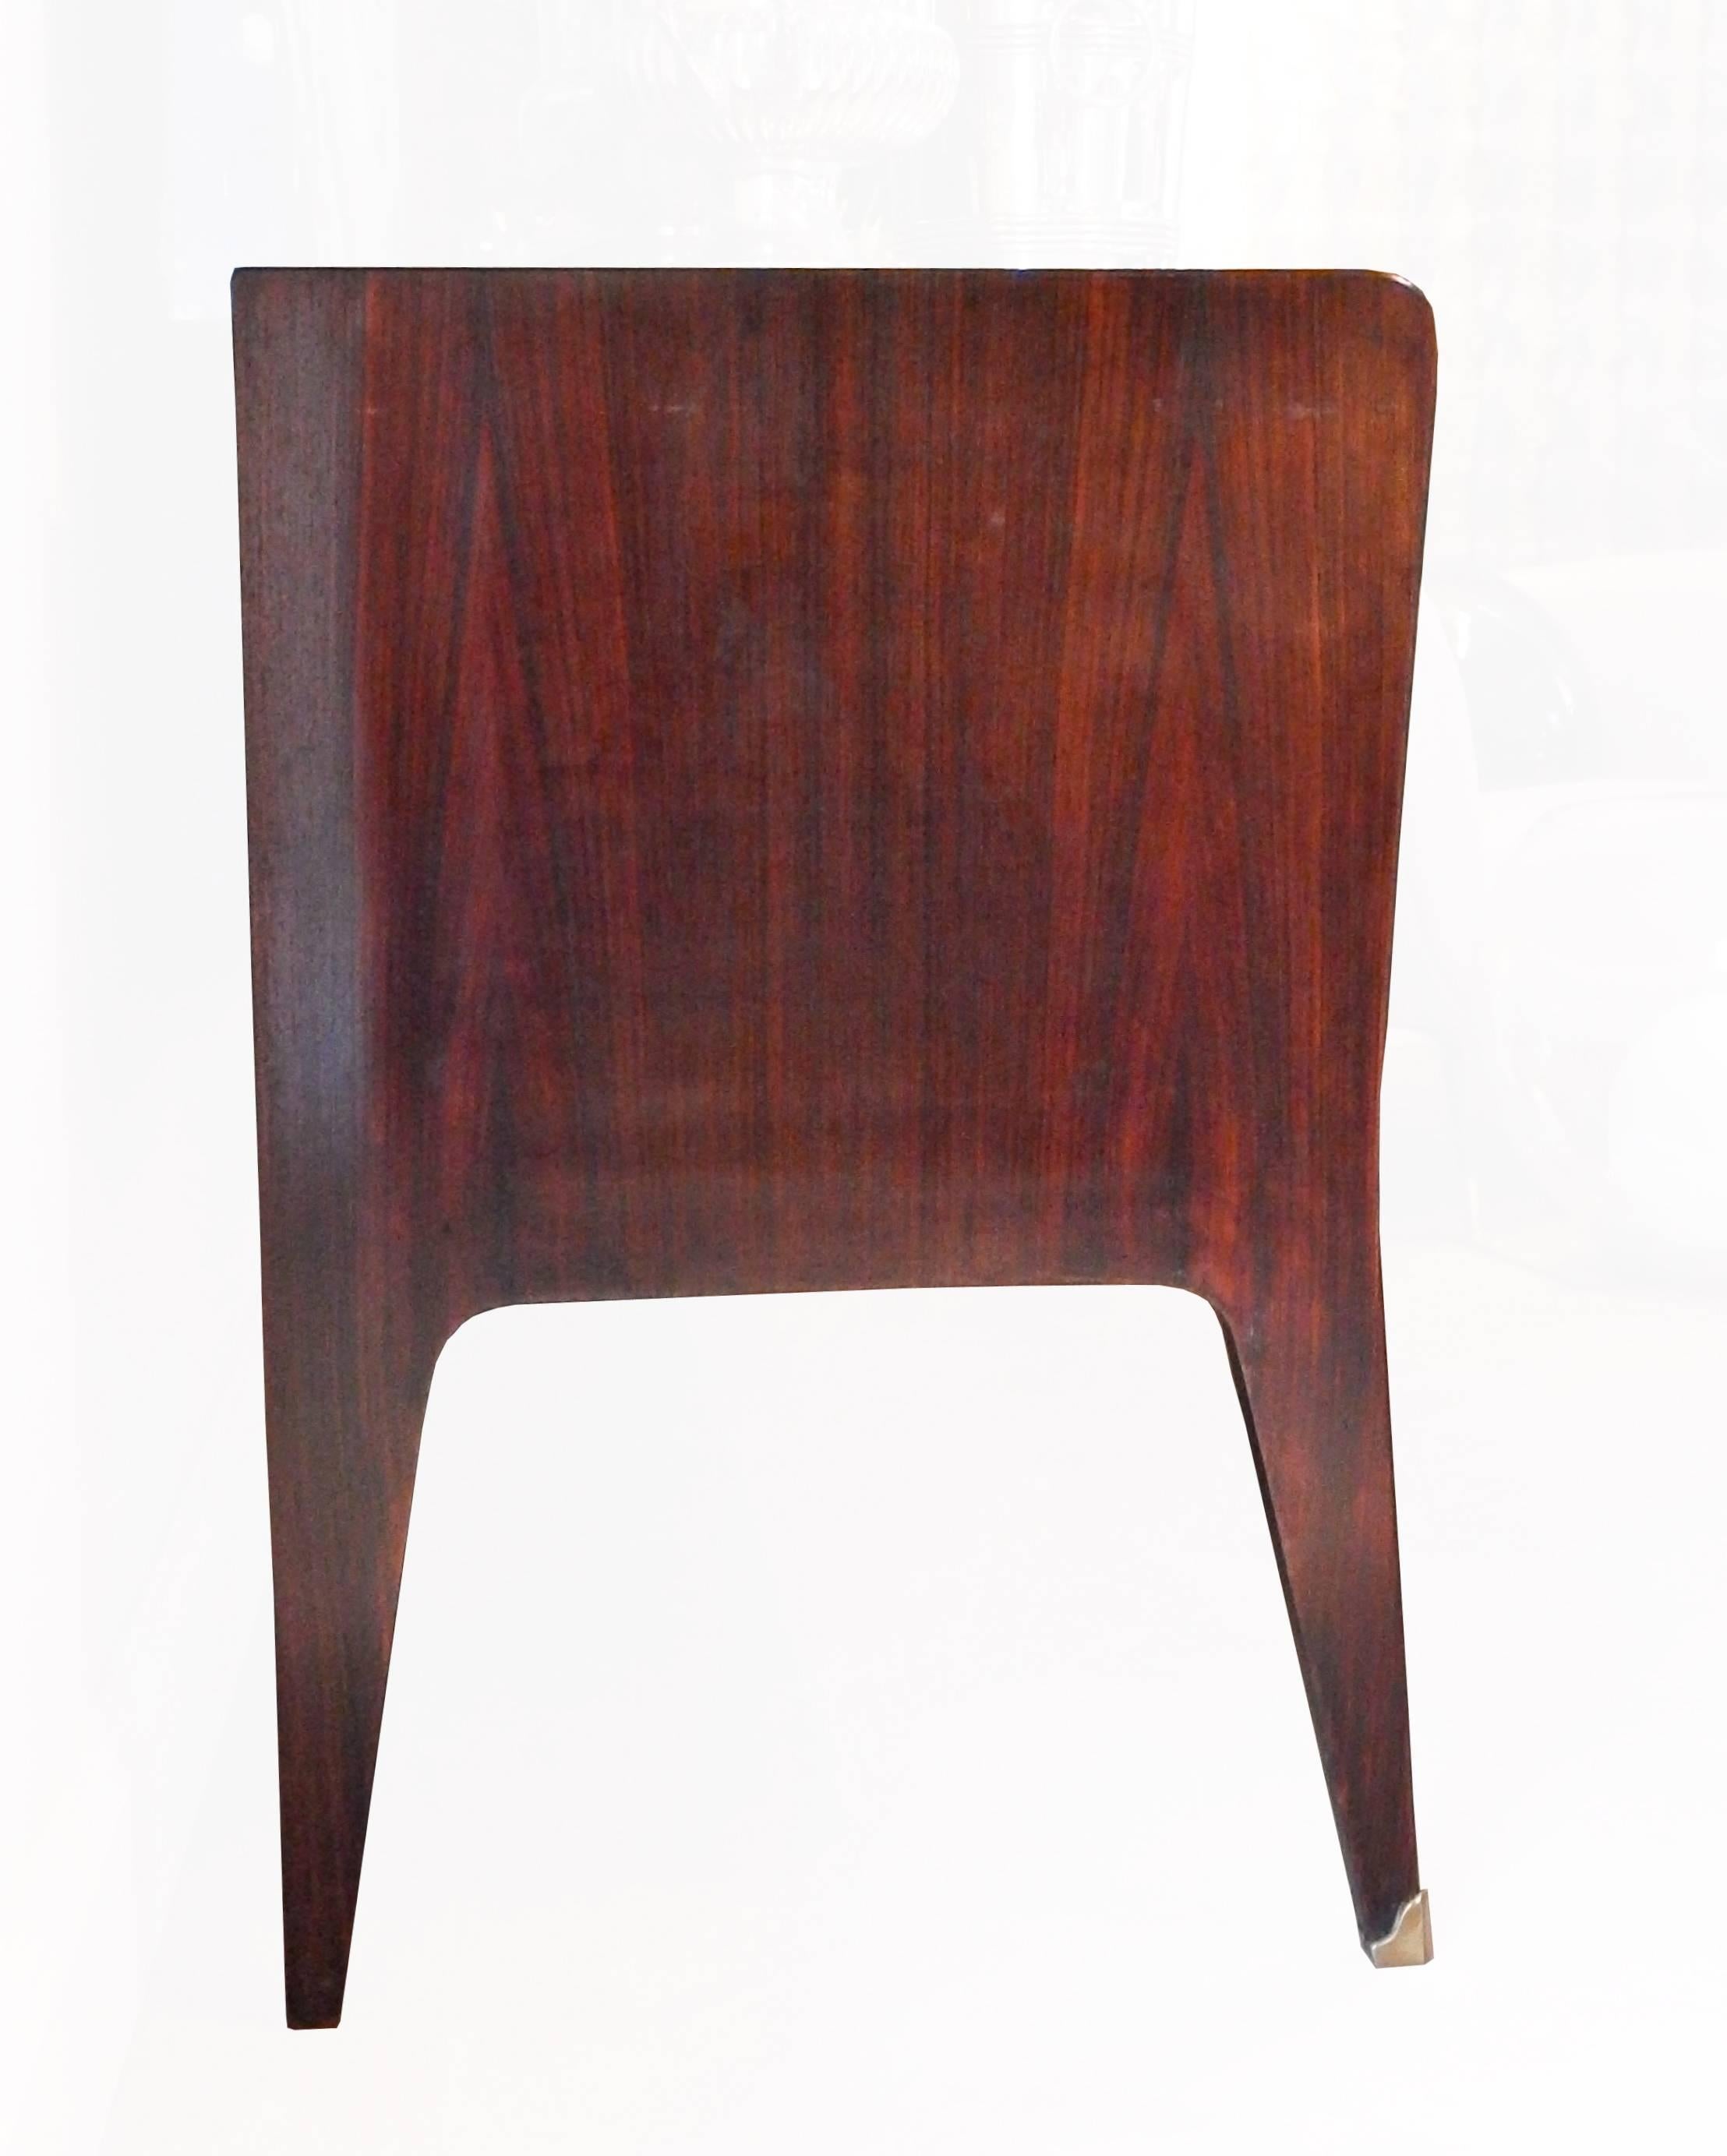 1950s Italian Rosewood Sideboard or Dresser In Good Condition For Sale In Schoten, BE